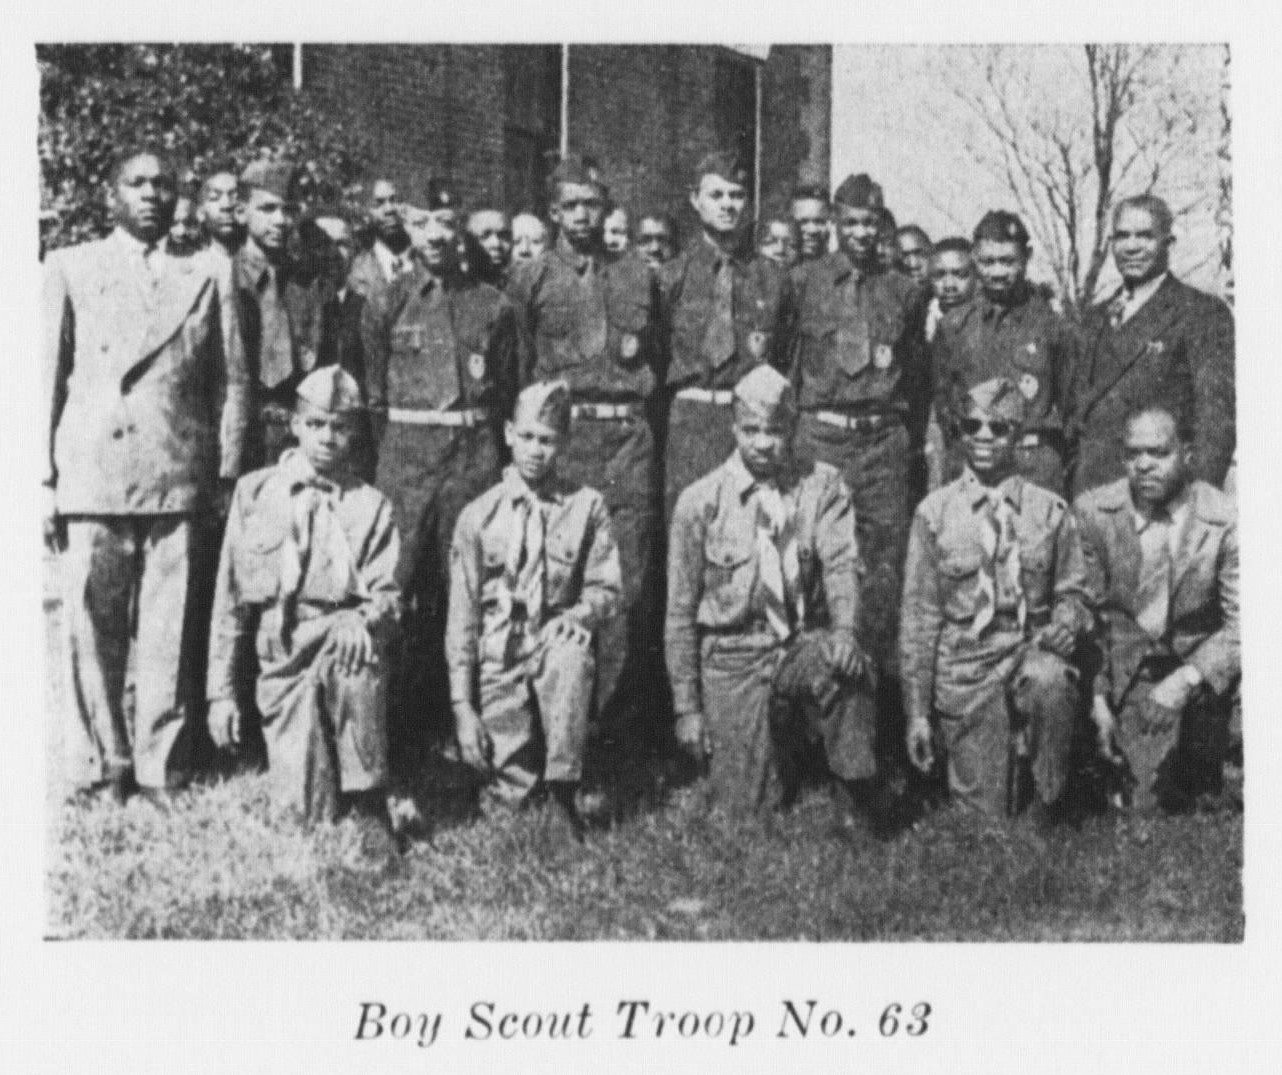 Boy Scout Troop No. 63. More description below.